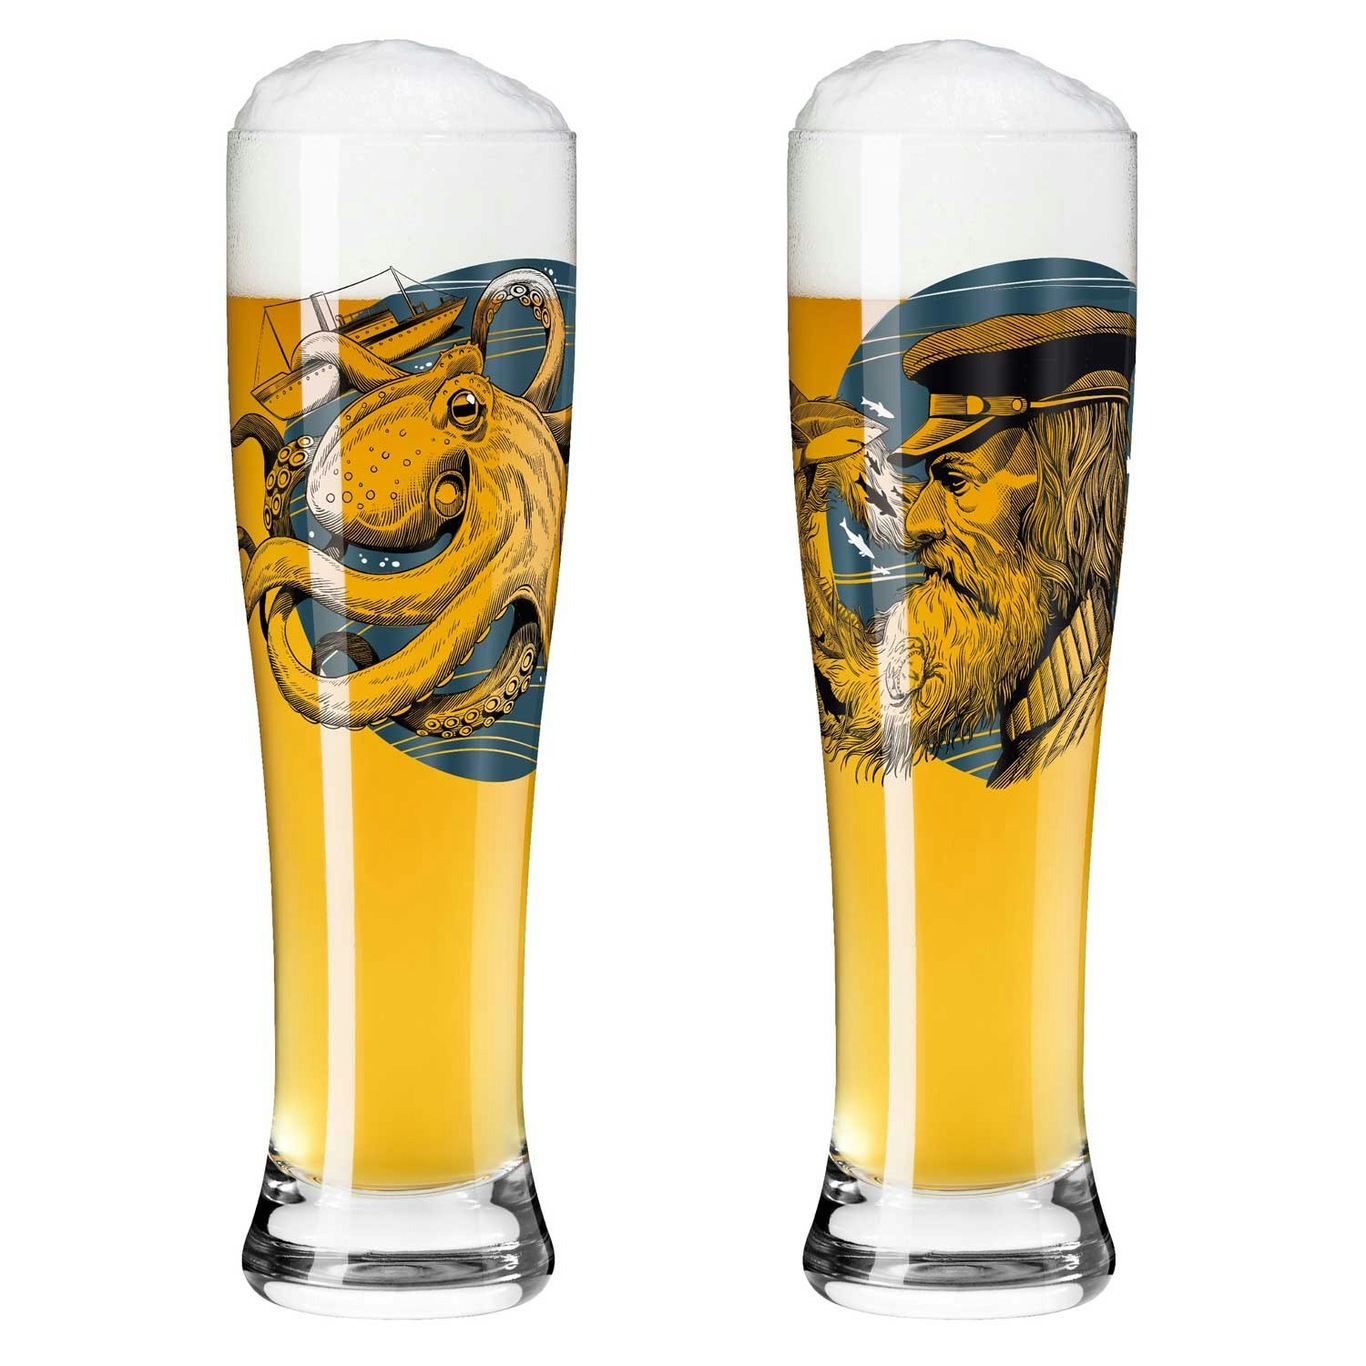 Brauchzeit Beer Glasses 2-pack, #9 & 10